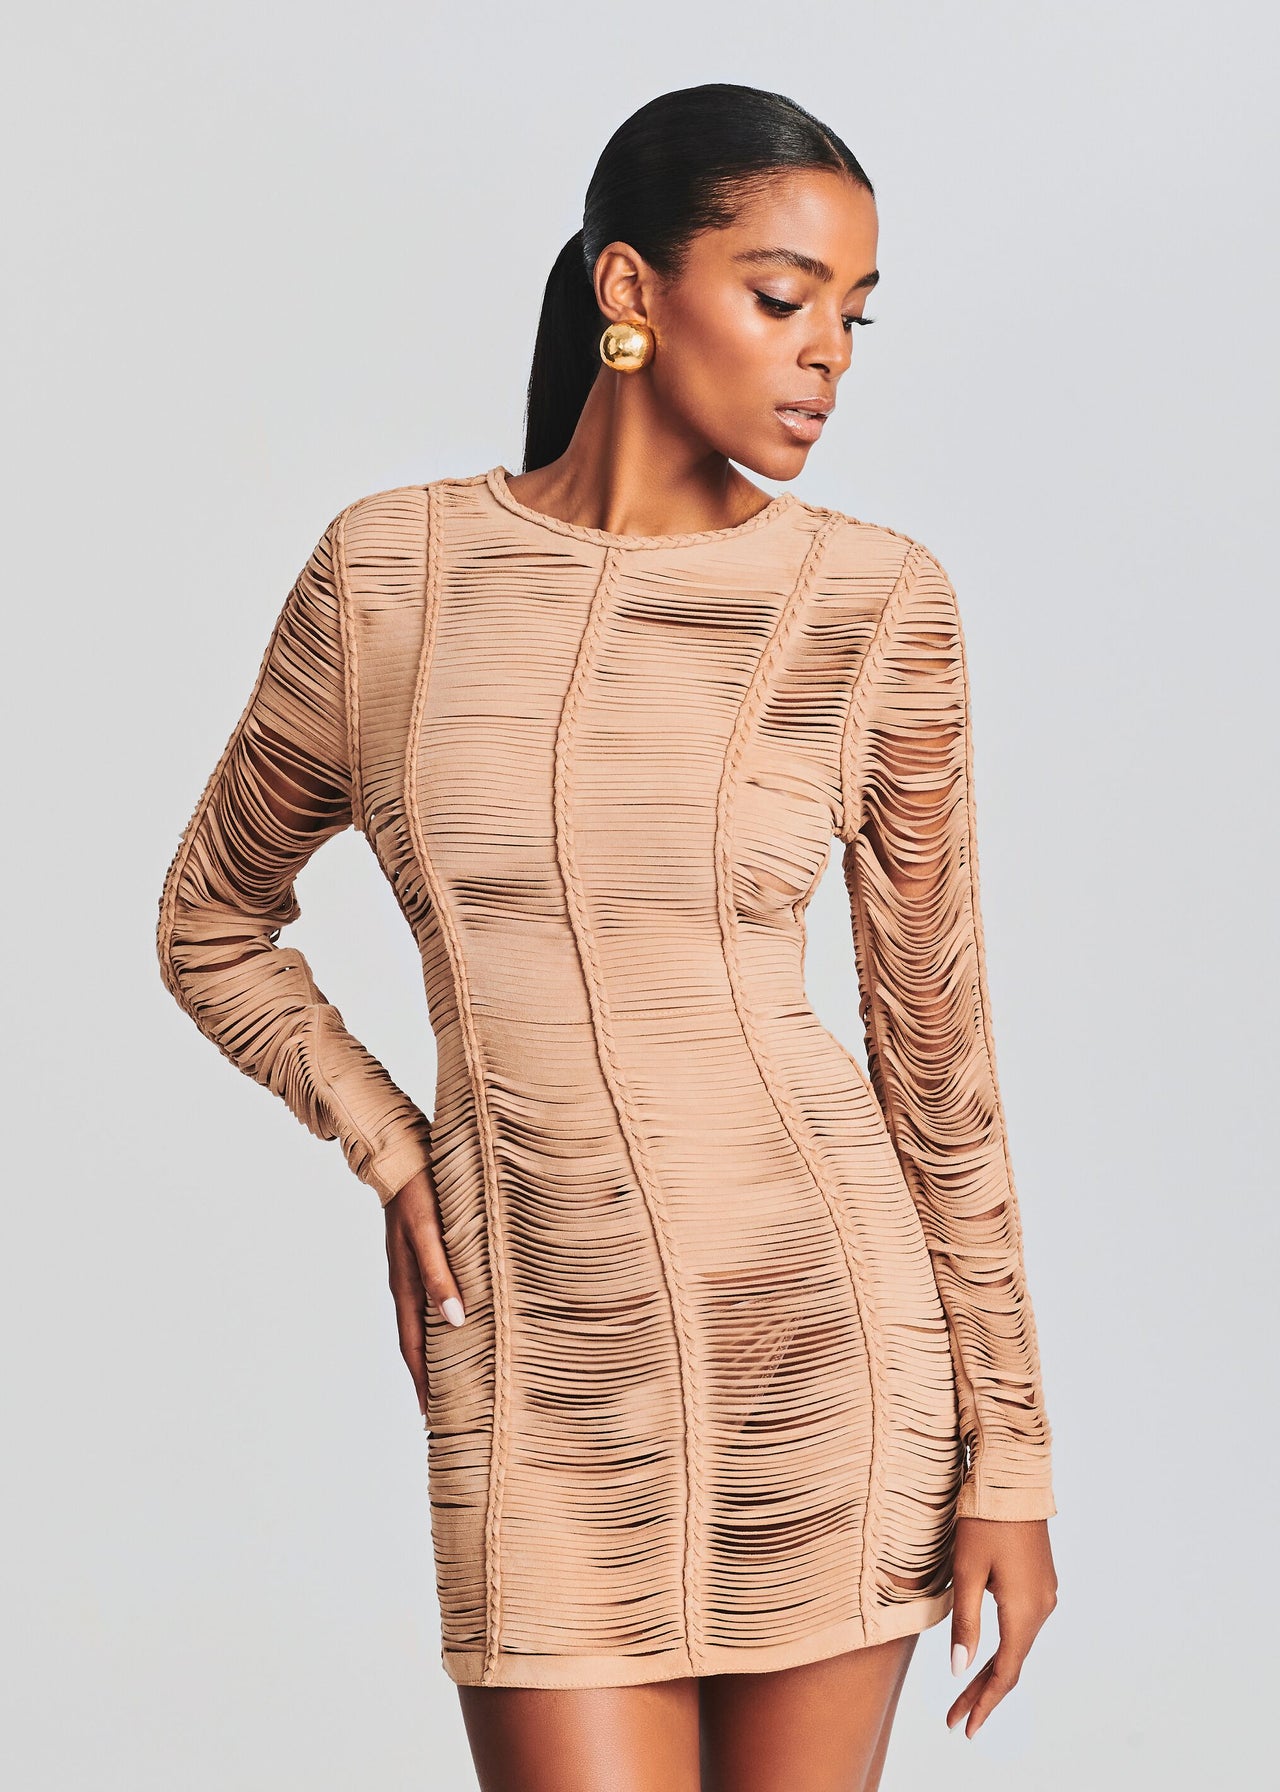 Ebony Suede Leather Dress